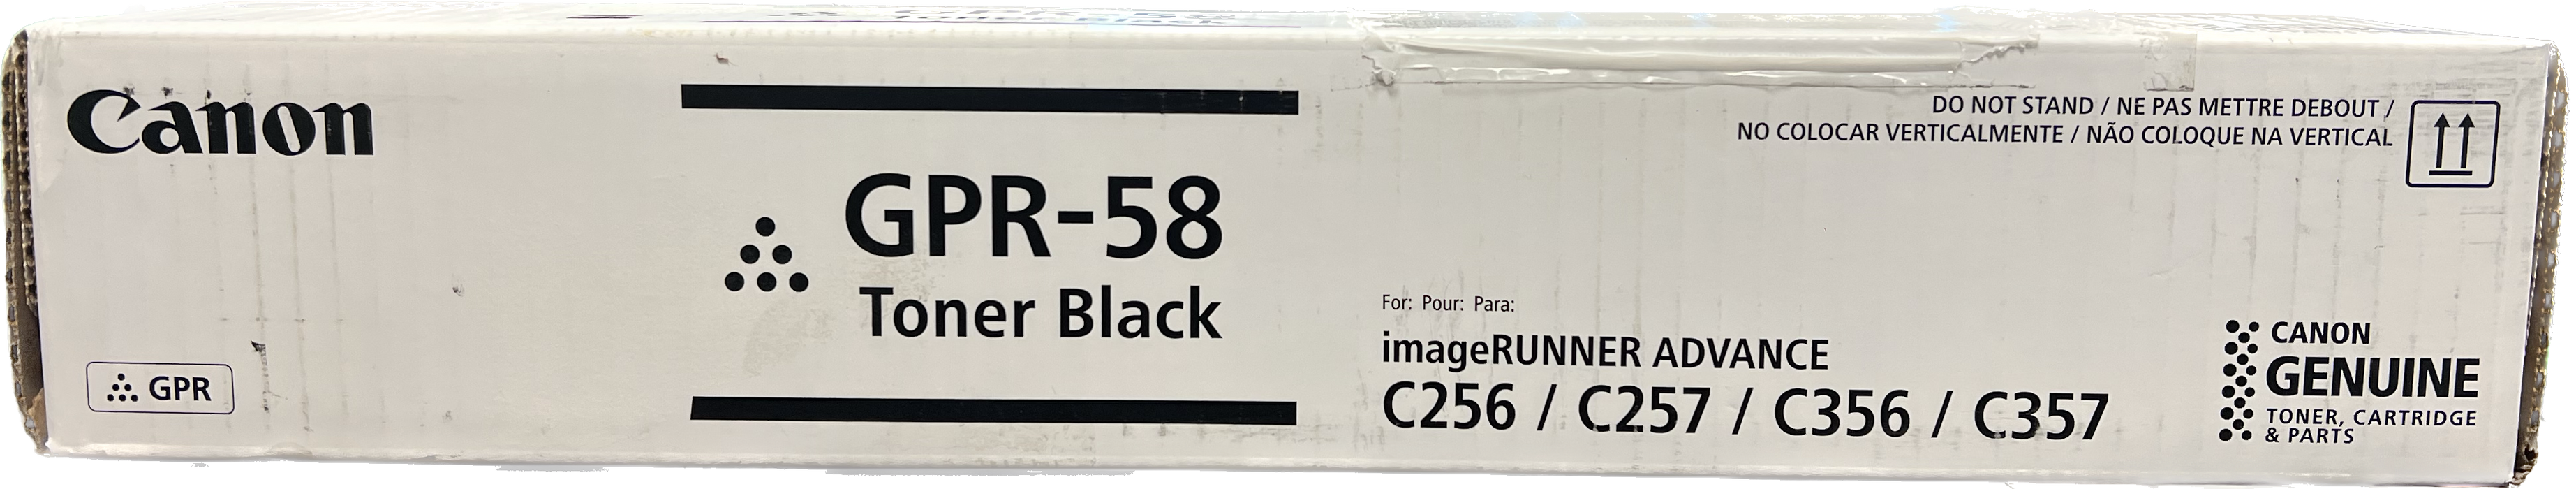 Genuine Canon Black Toner Cartridge | 2182C003 | GPR-58K